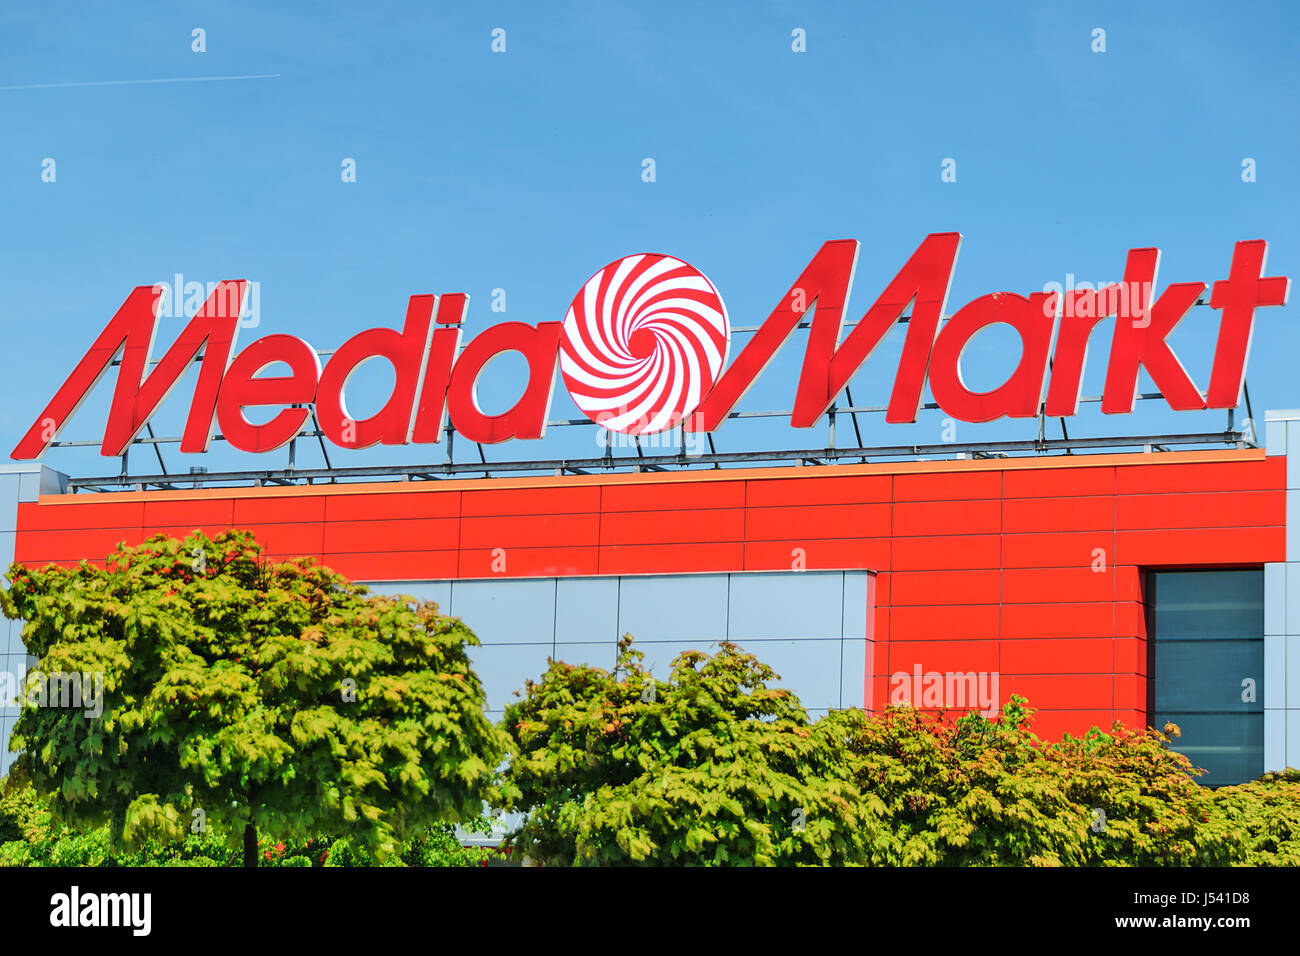 Mediamarkt media markt logo hi-res stock photography and images - Alamy